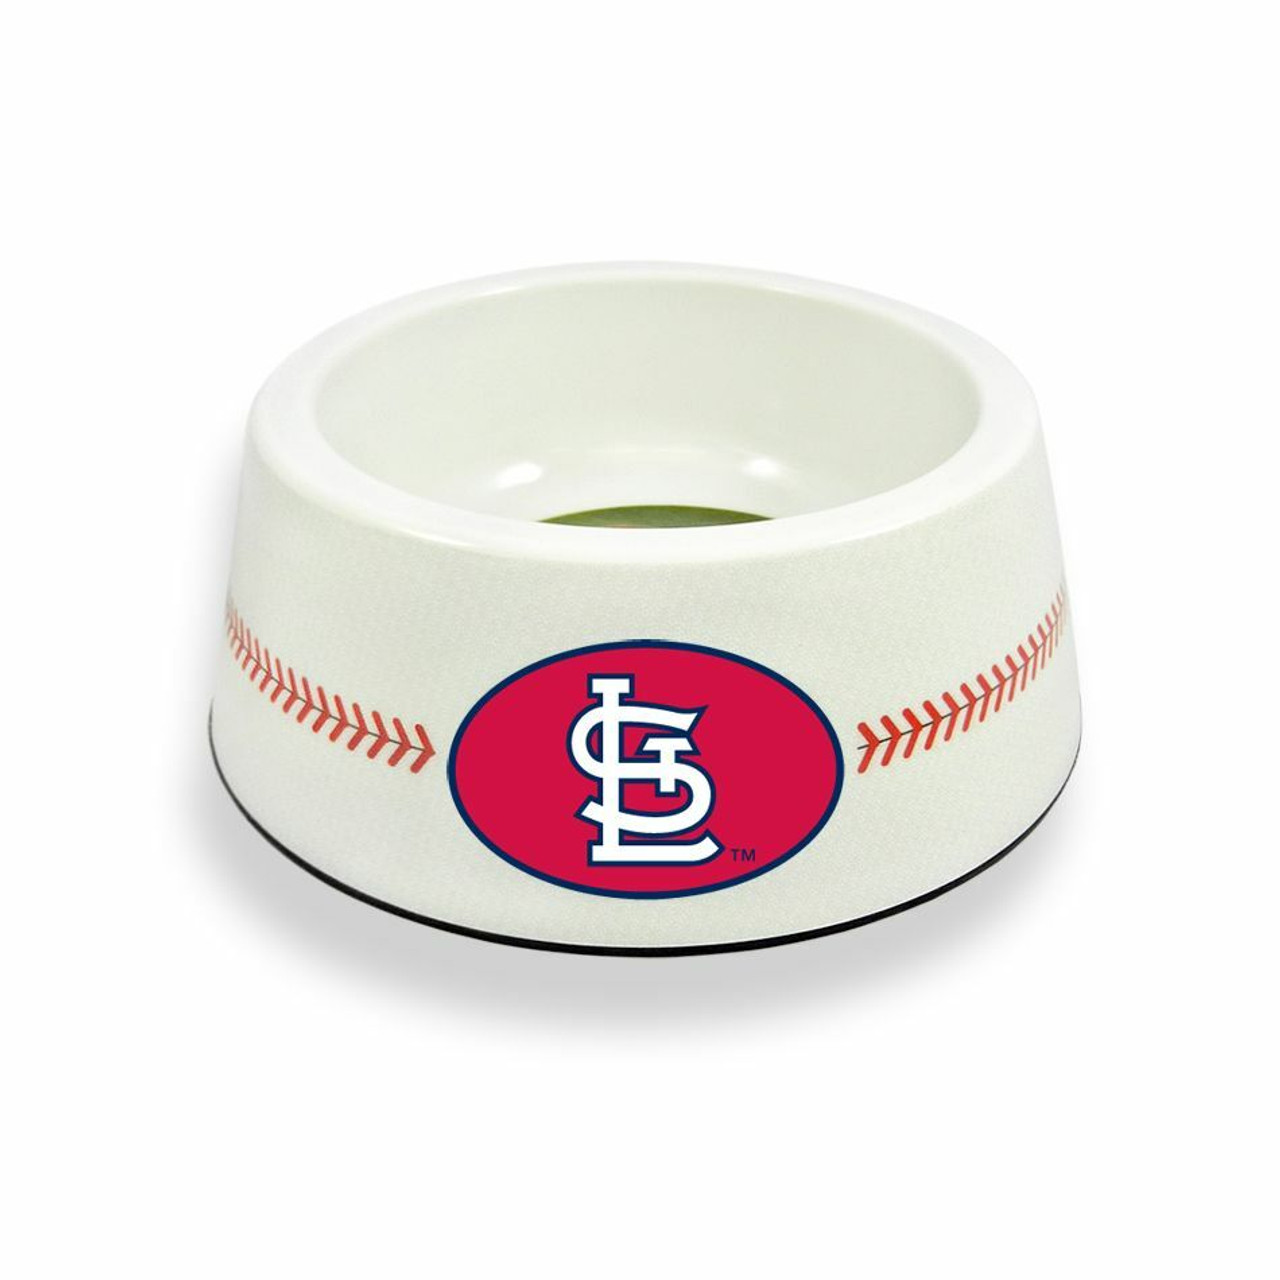 St. Louis Cardinals Merchandise & Gifts - SportsUnlimited.com